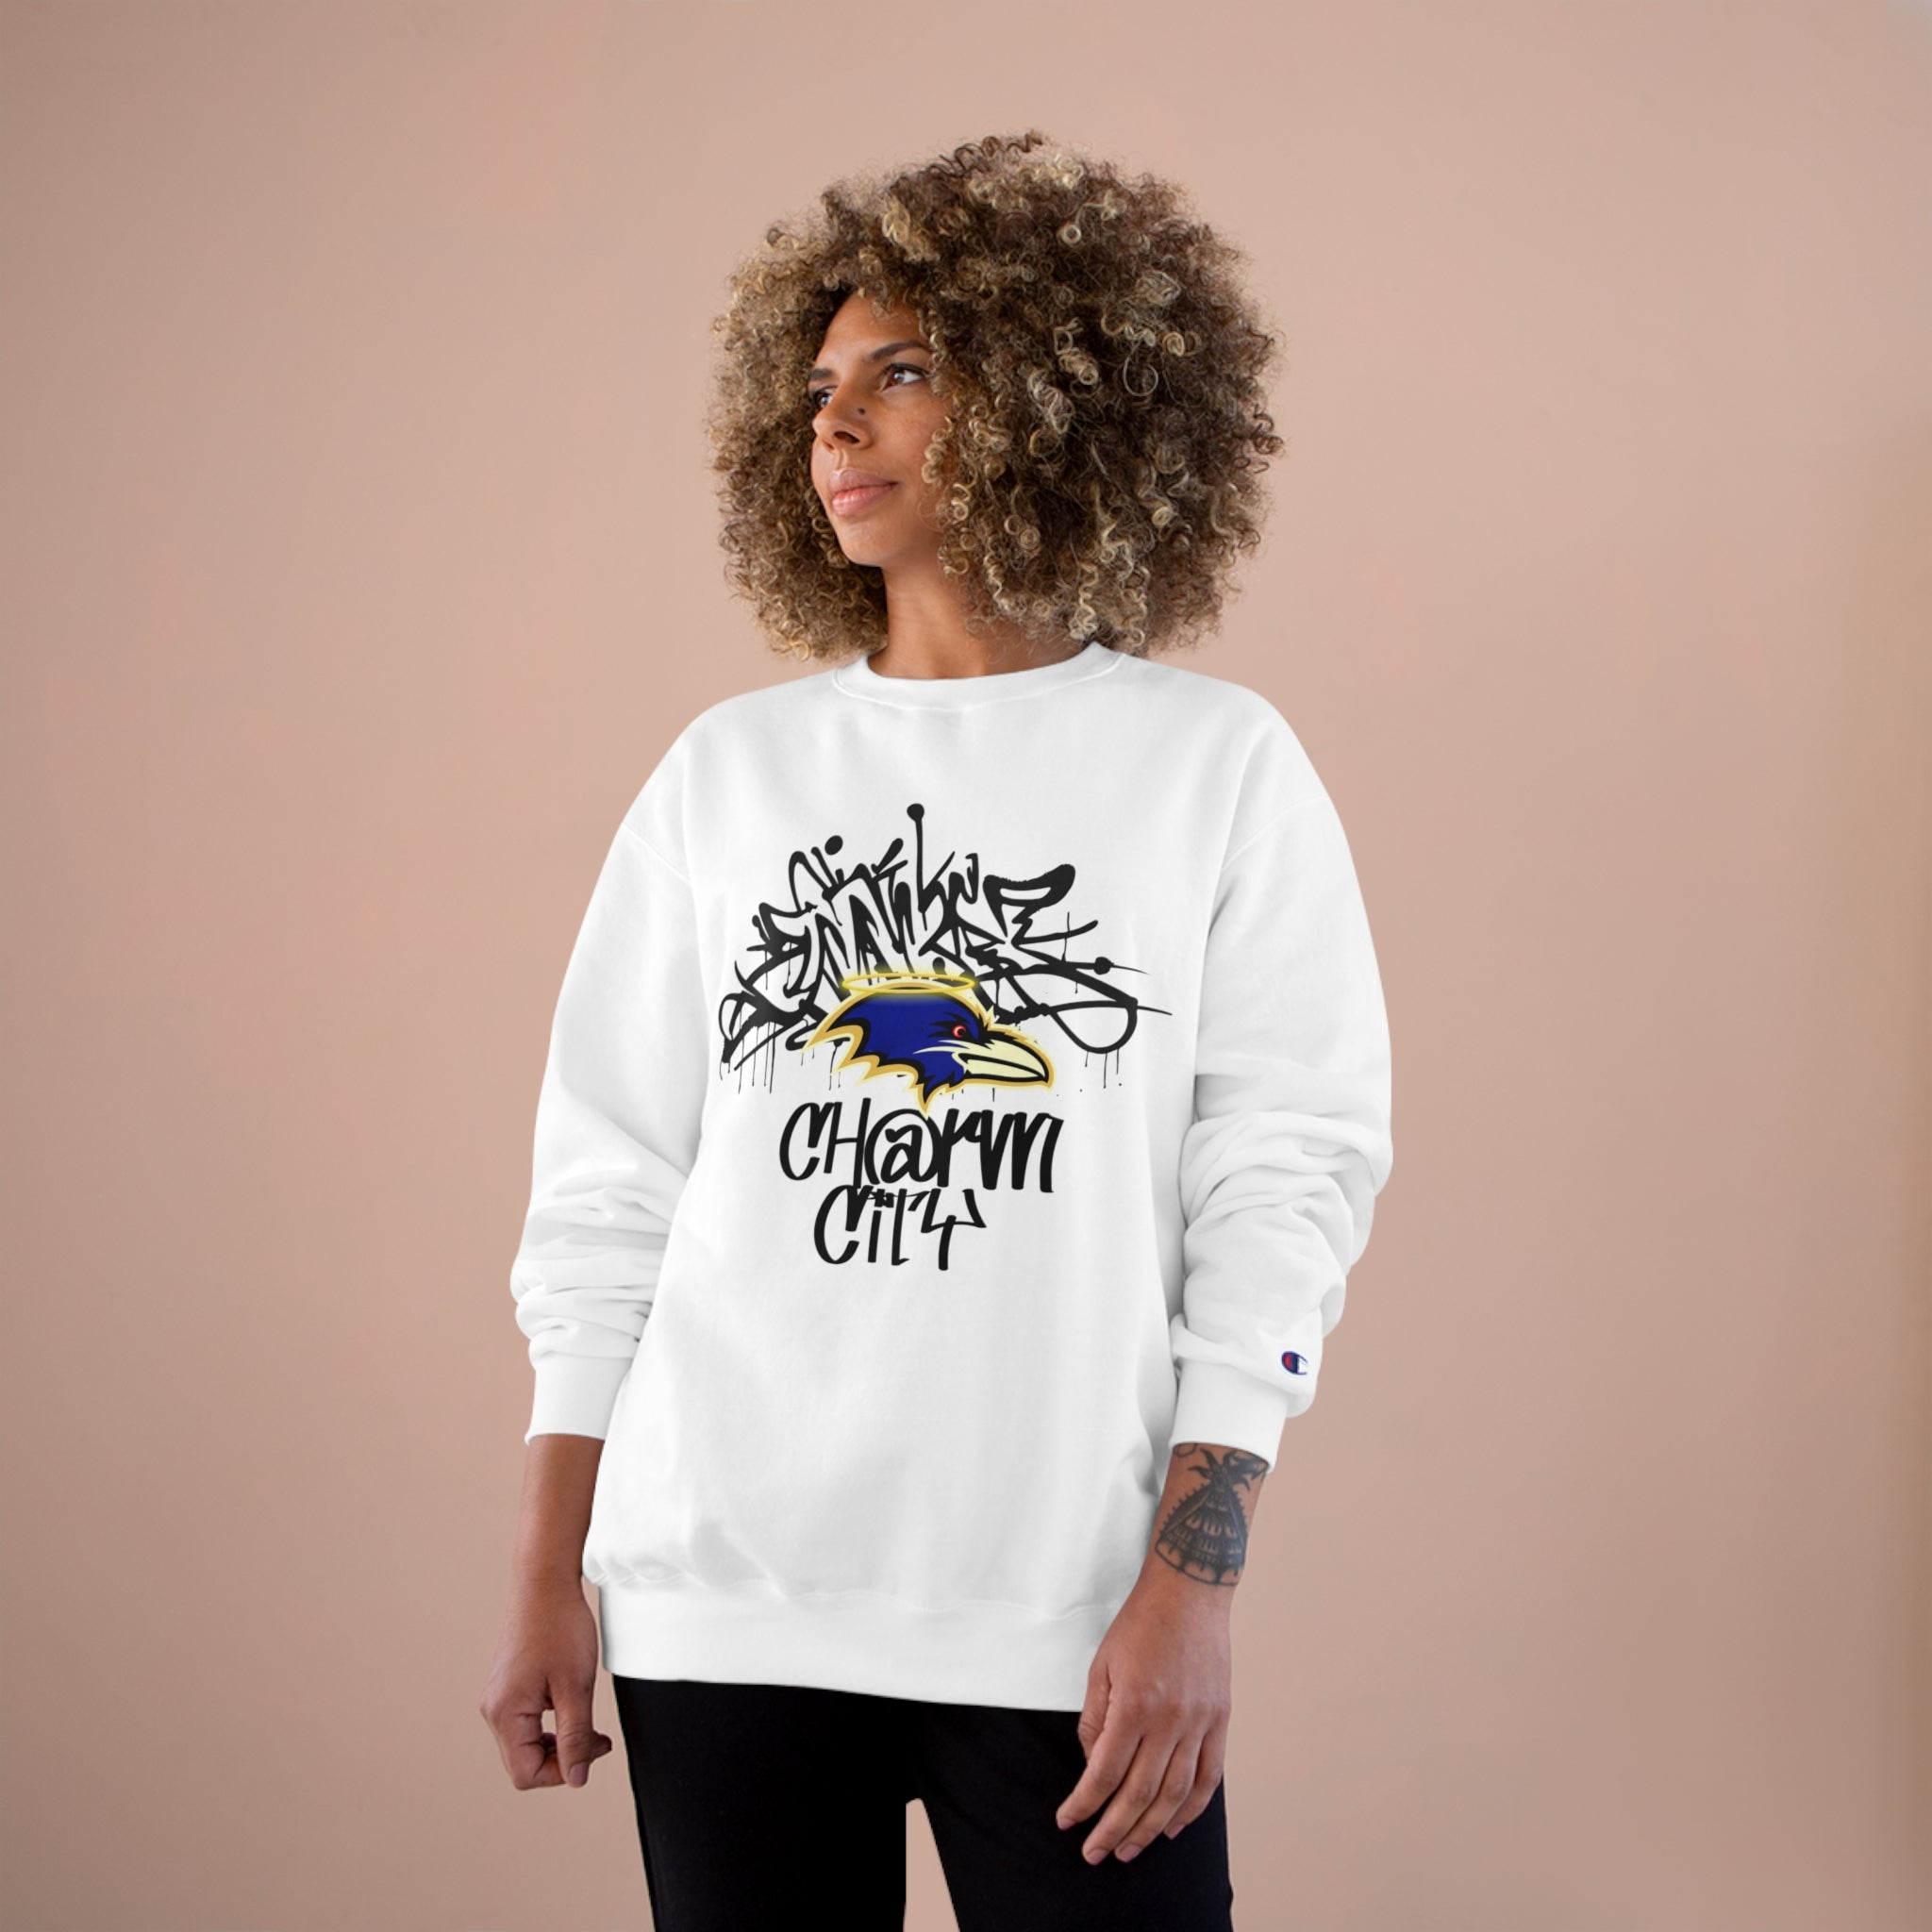 FURDreams “BWI” I Champion Sweatshirt